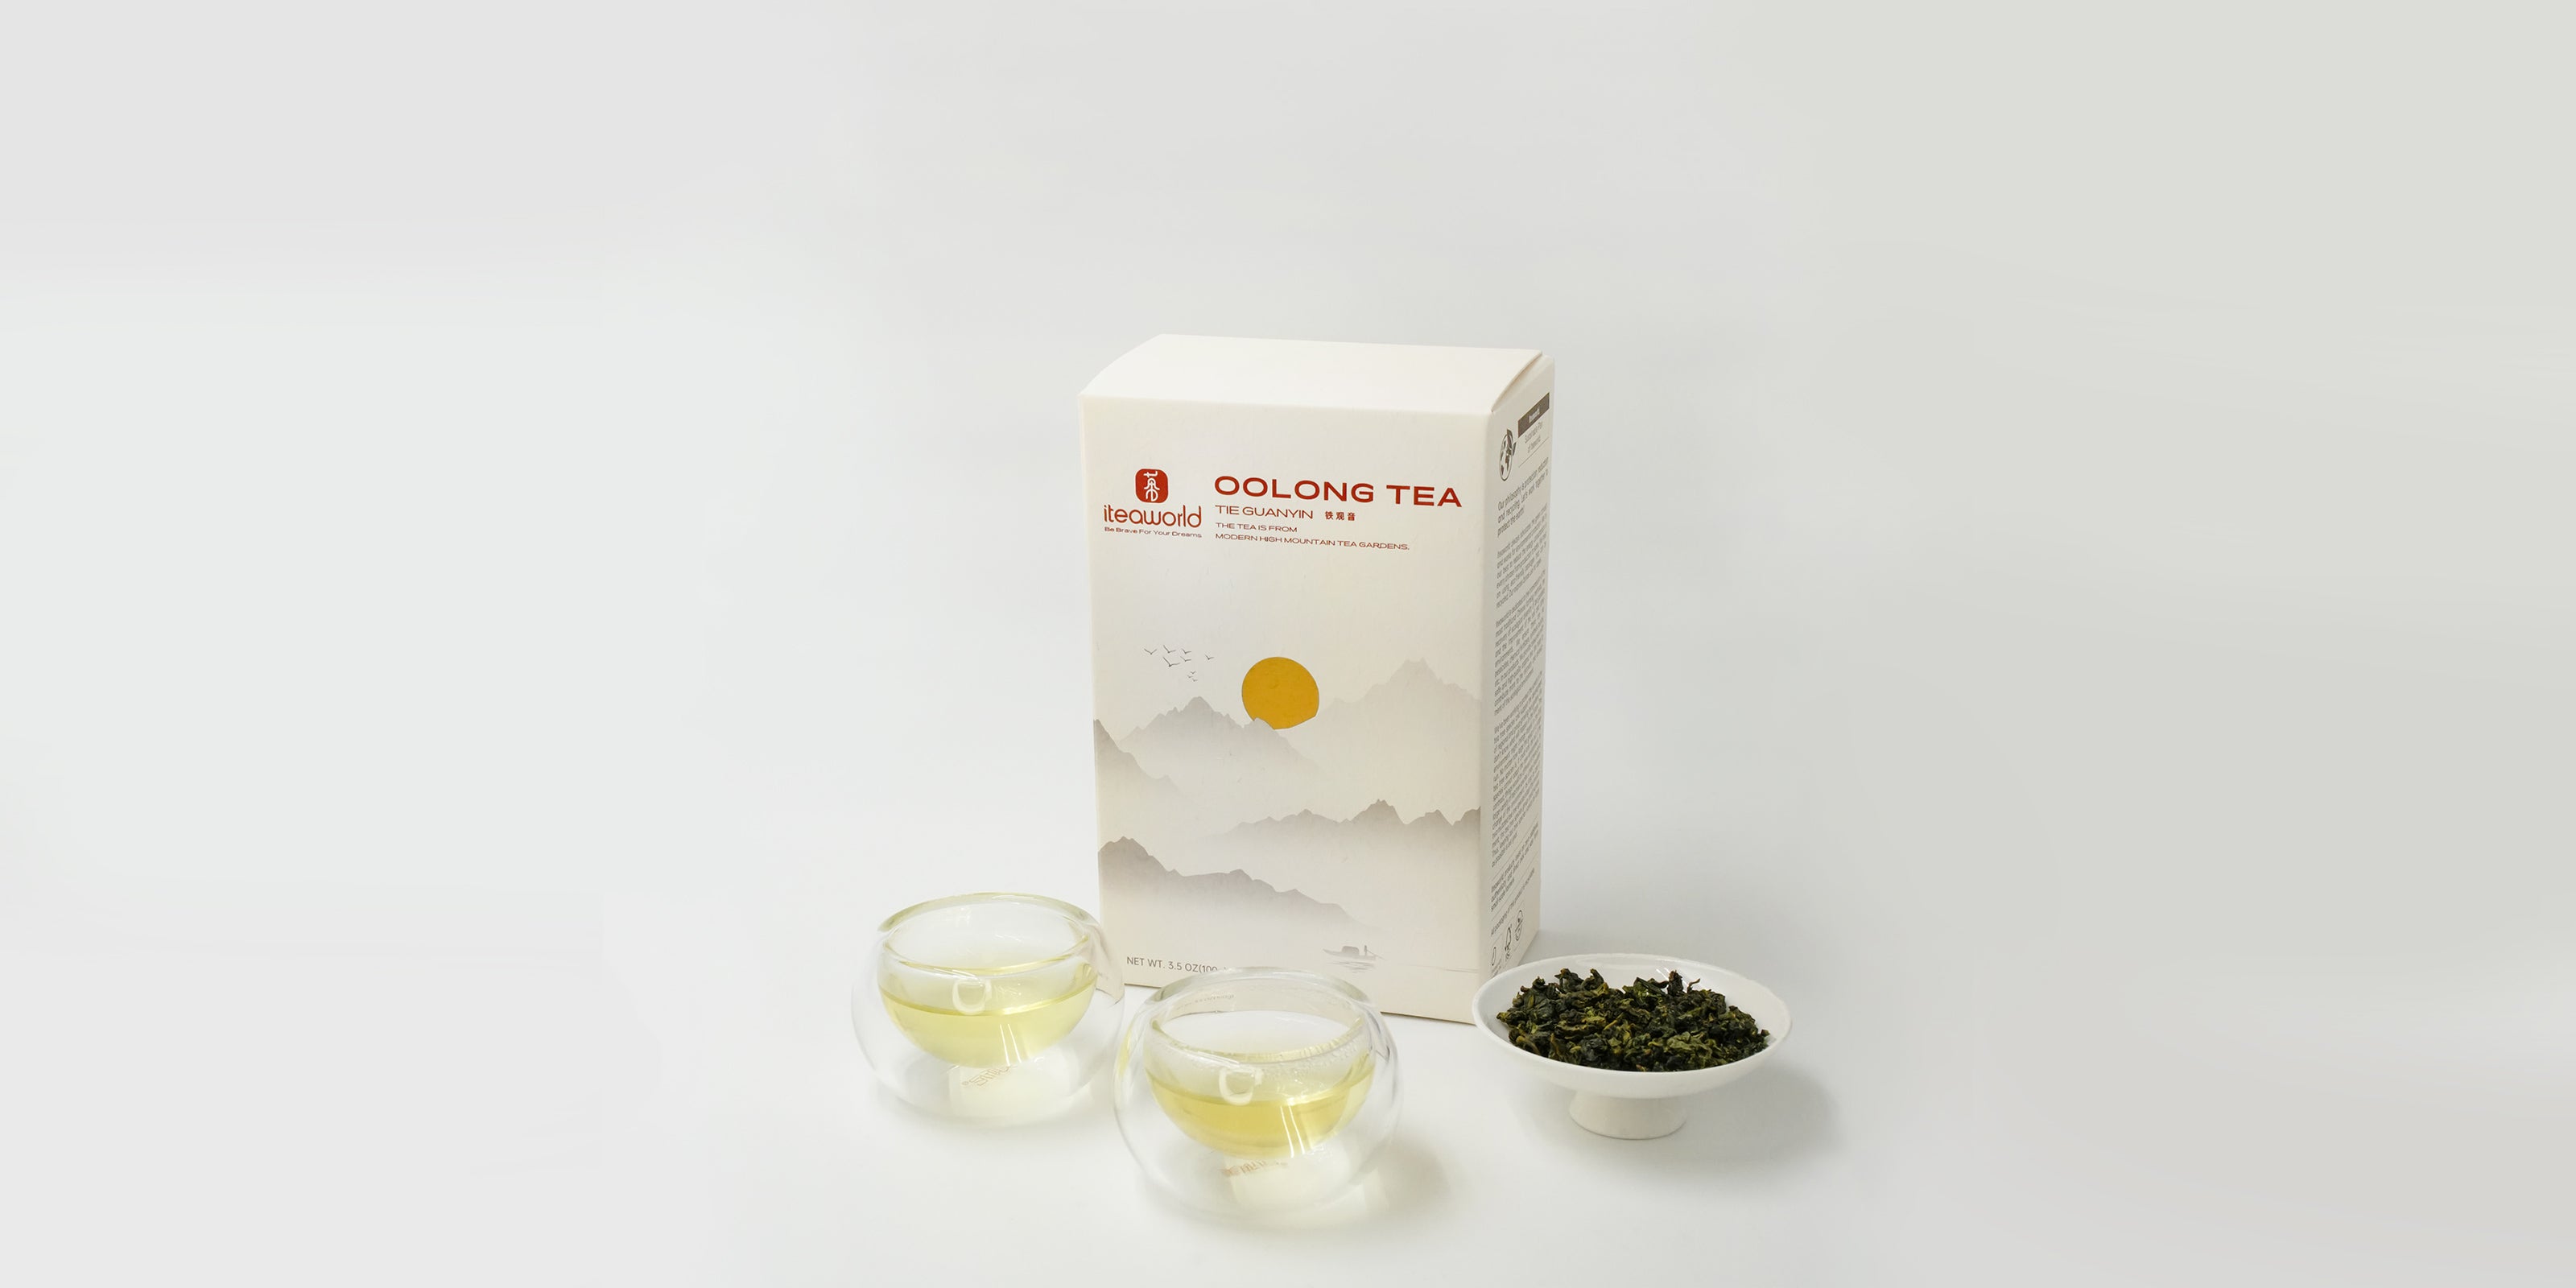 Tie-Guanyin-Oolong-Tea